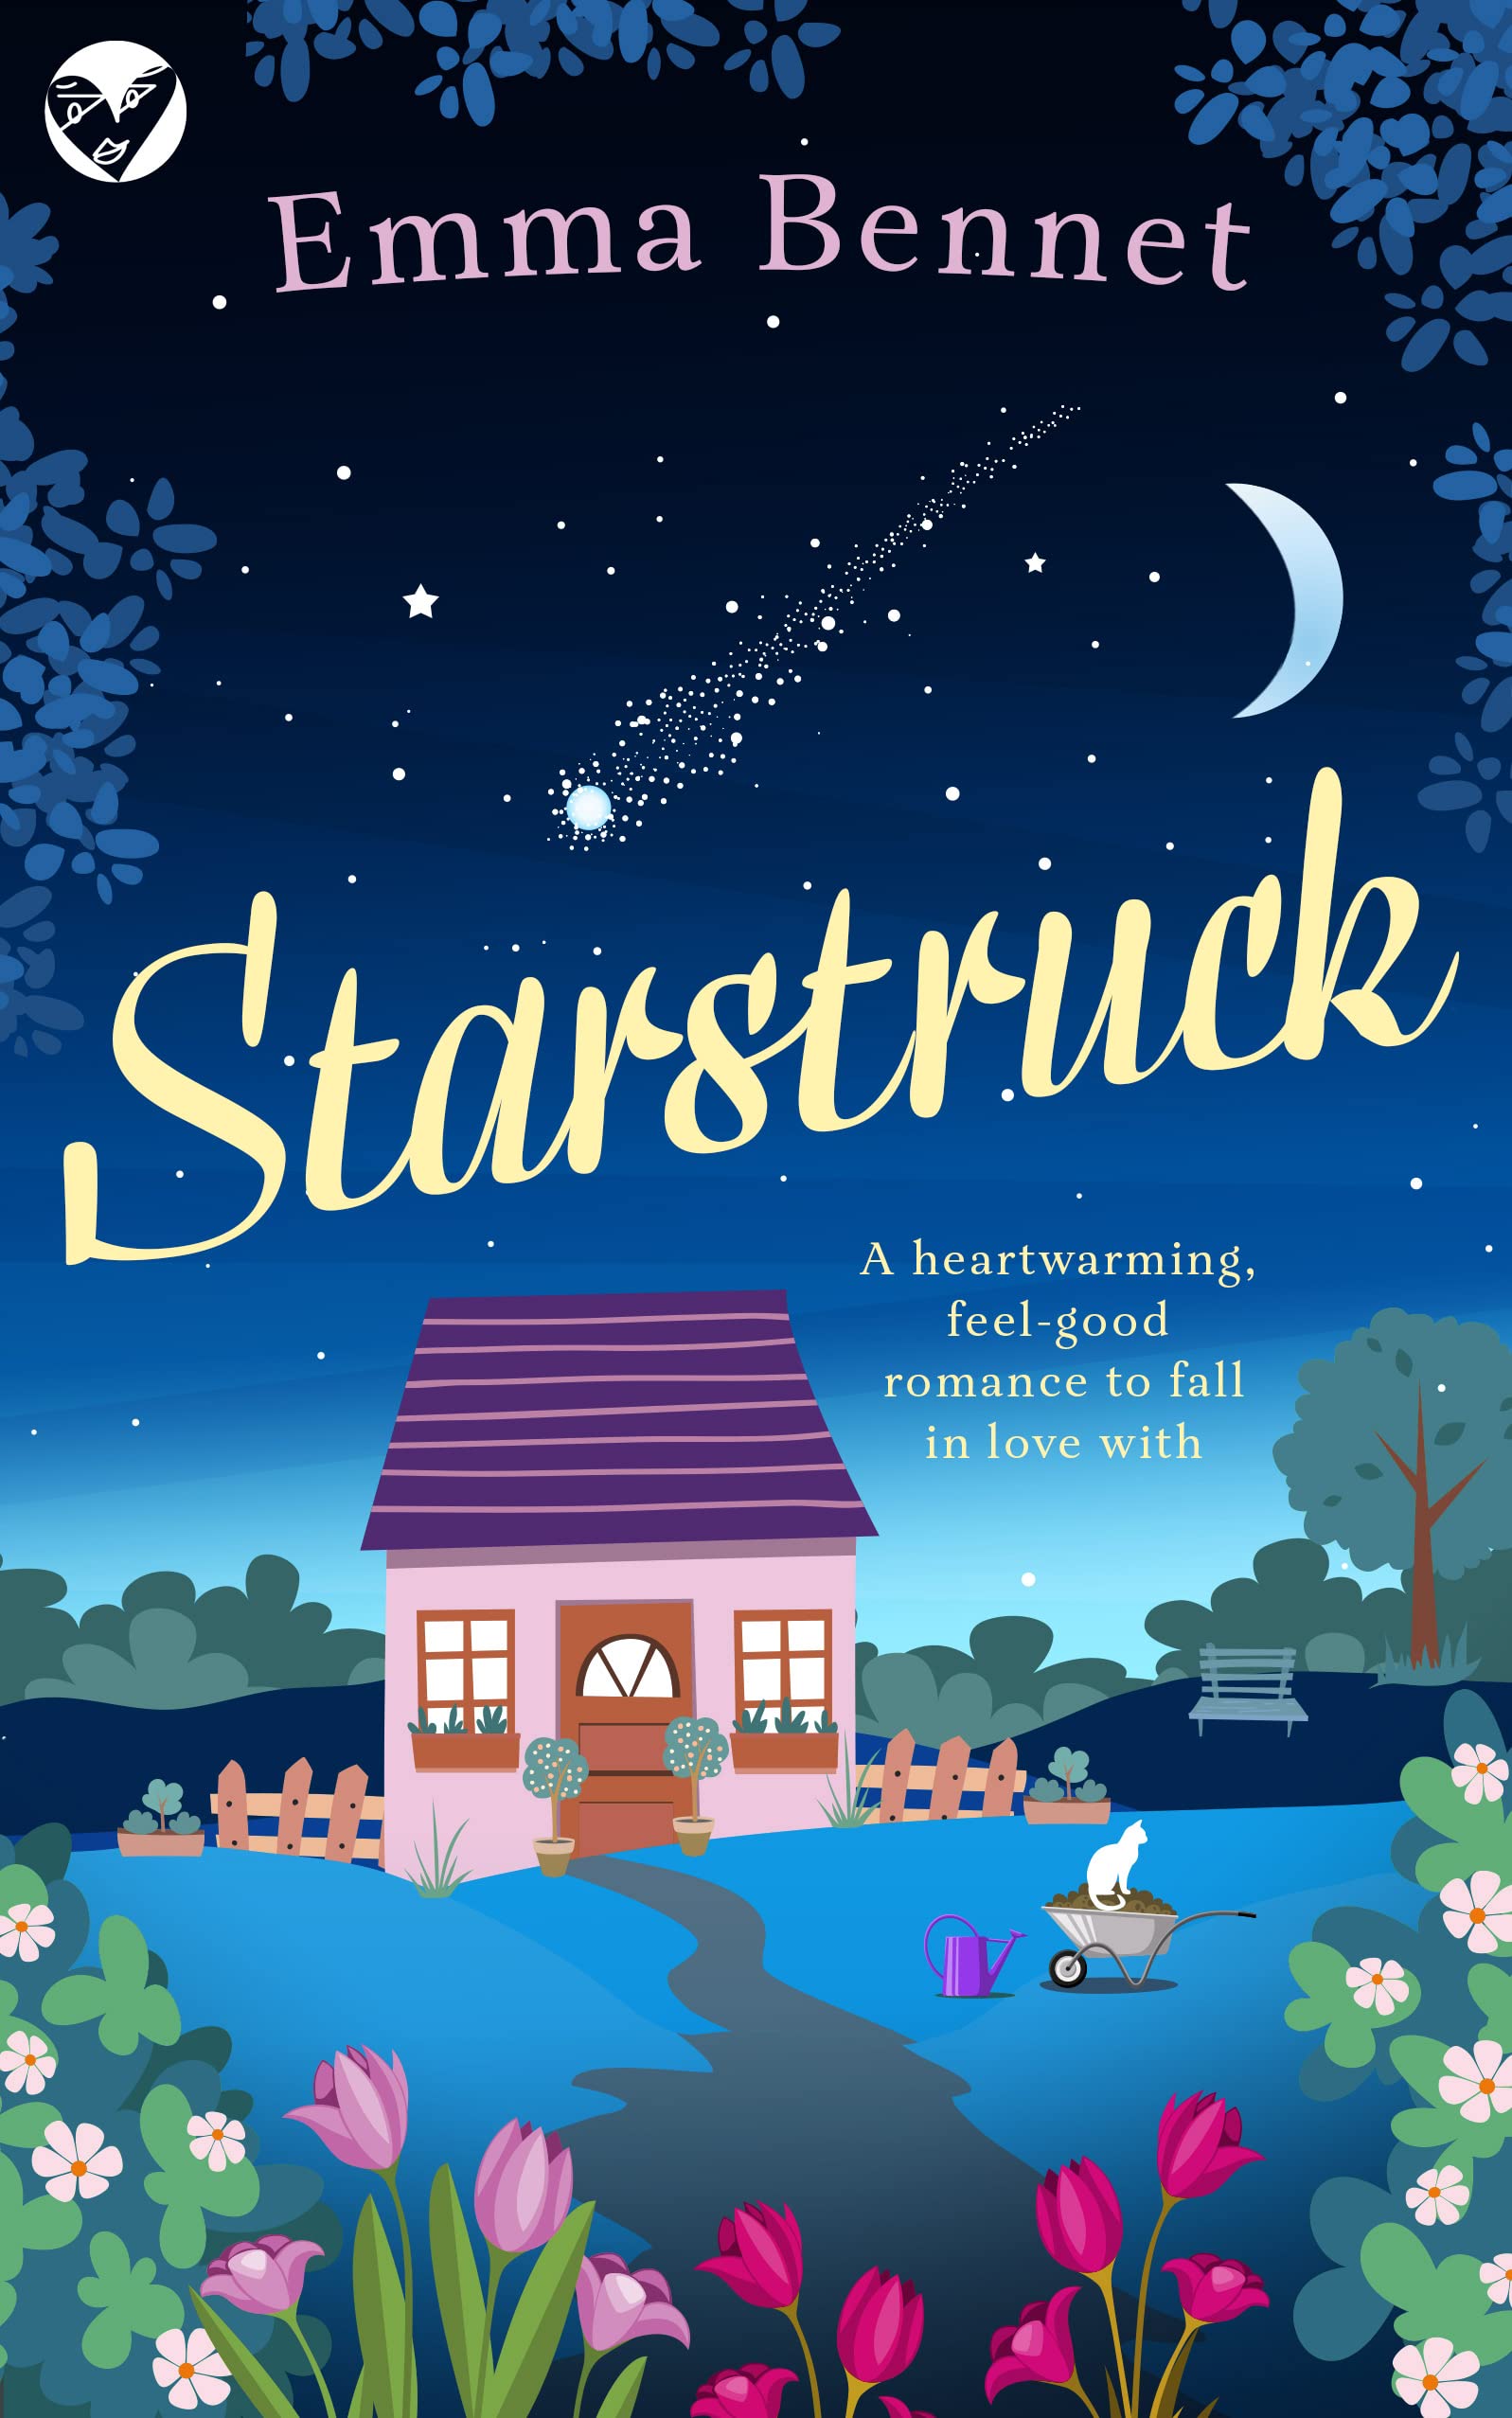 Starstruck by Emma Bennet